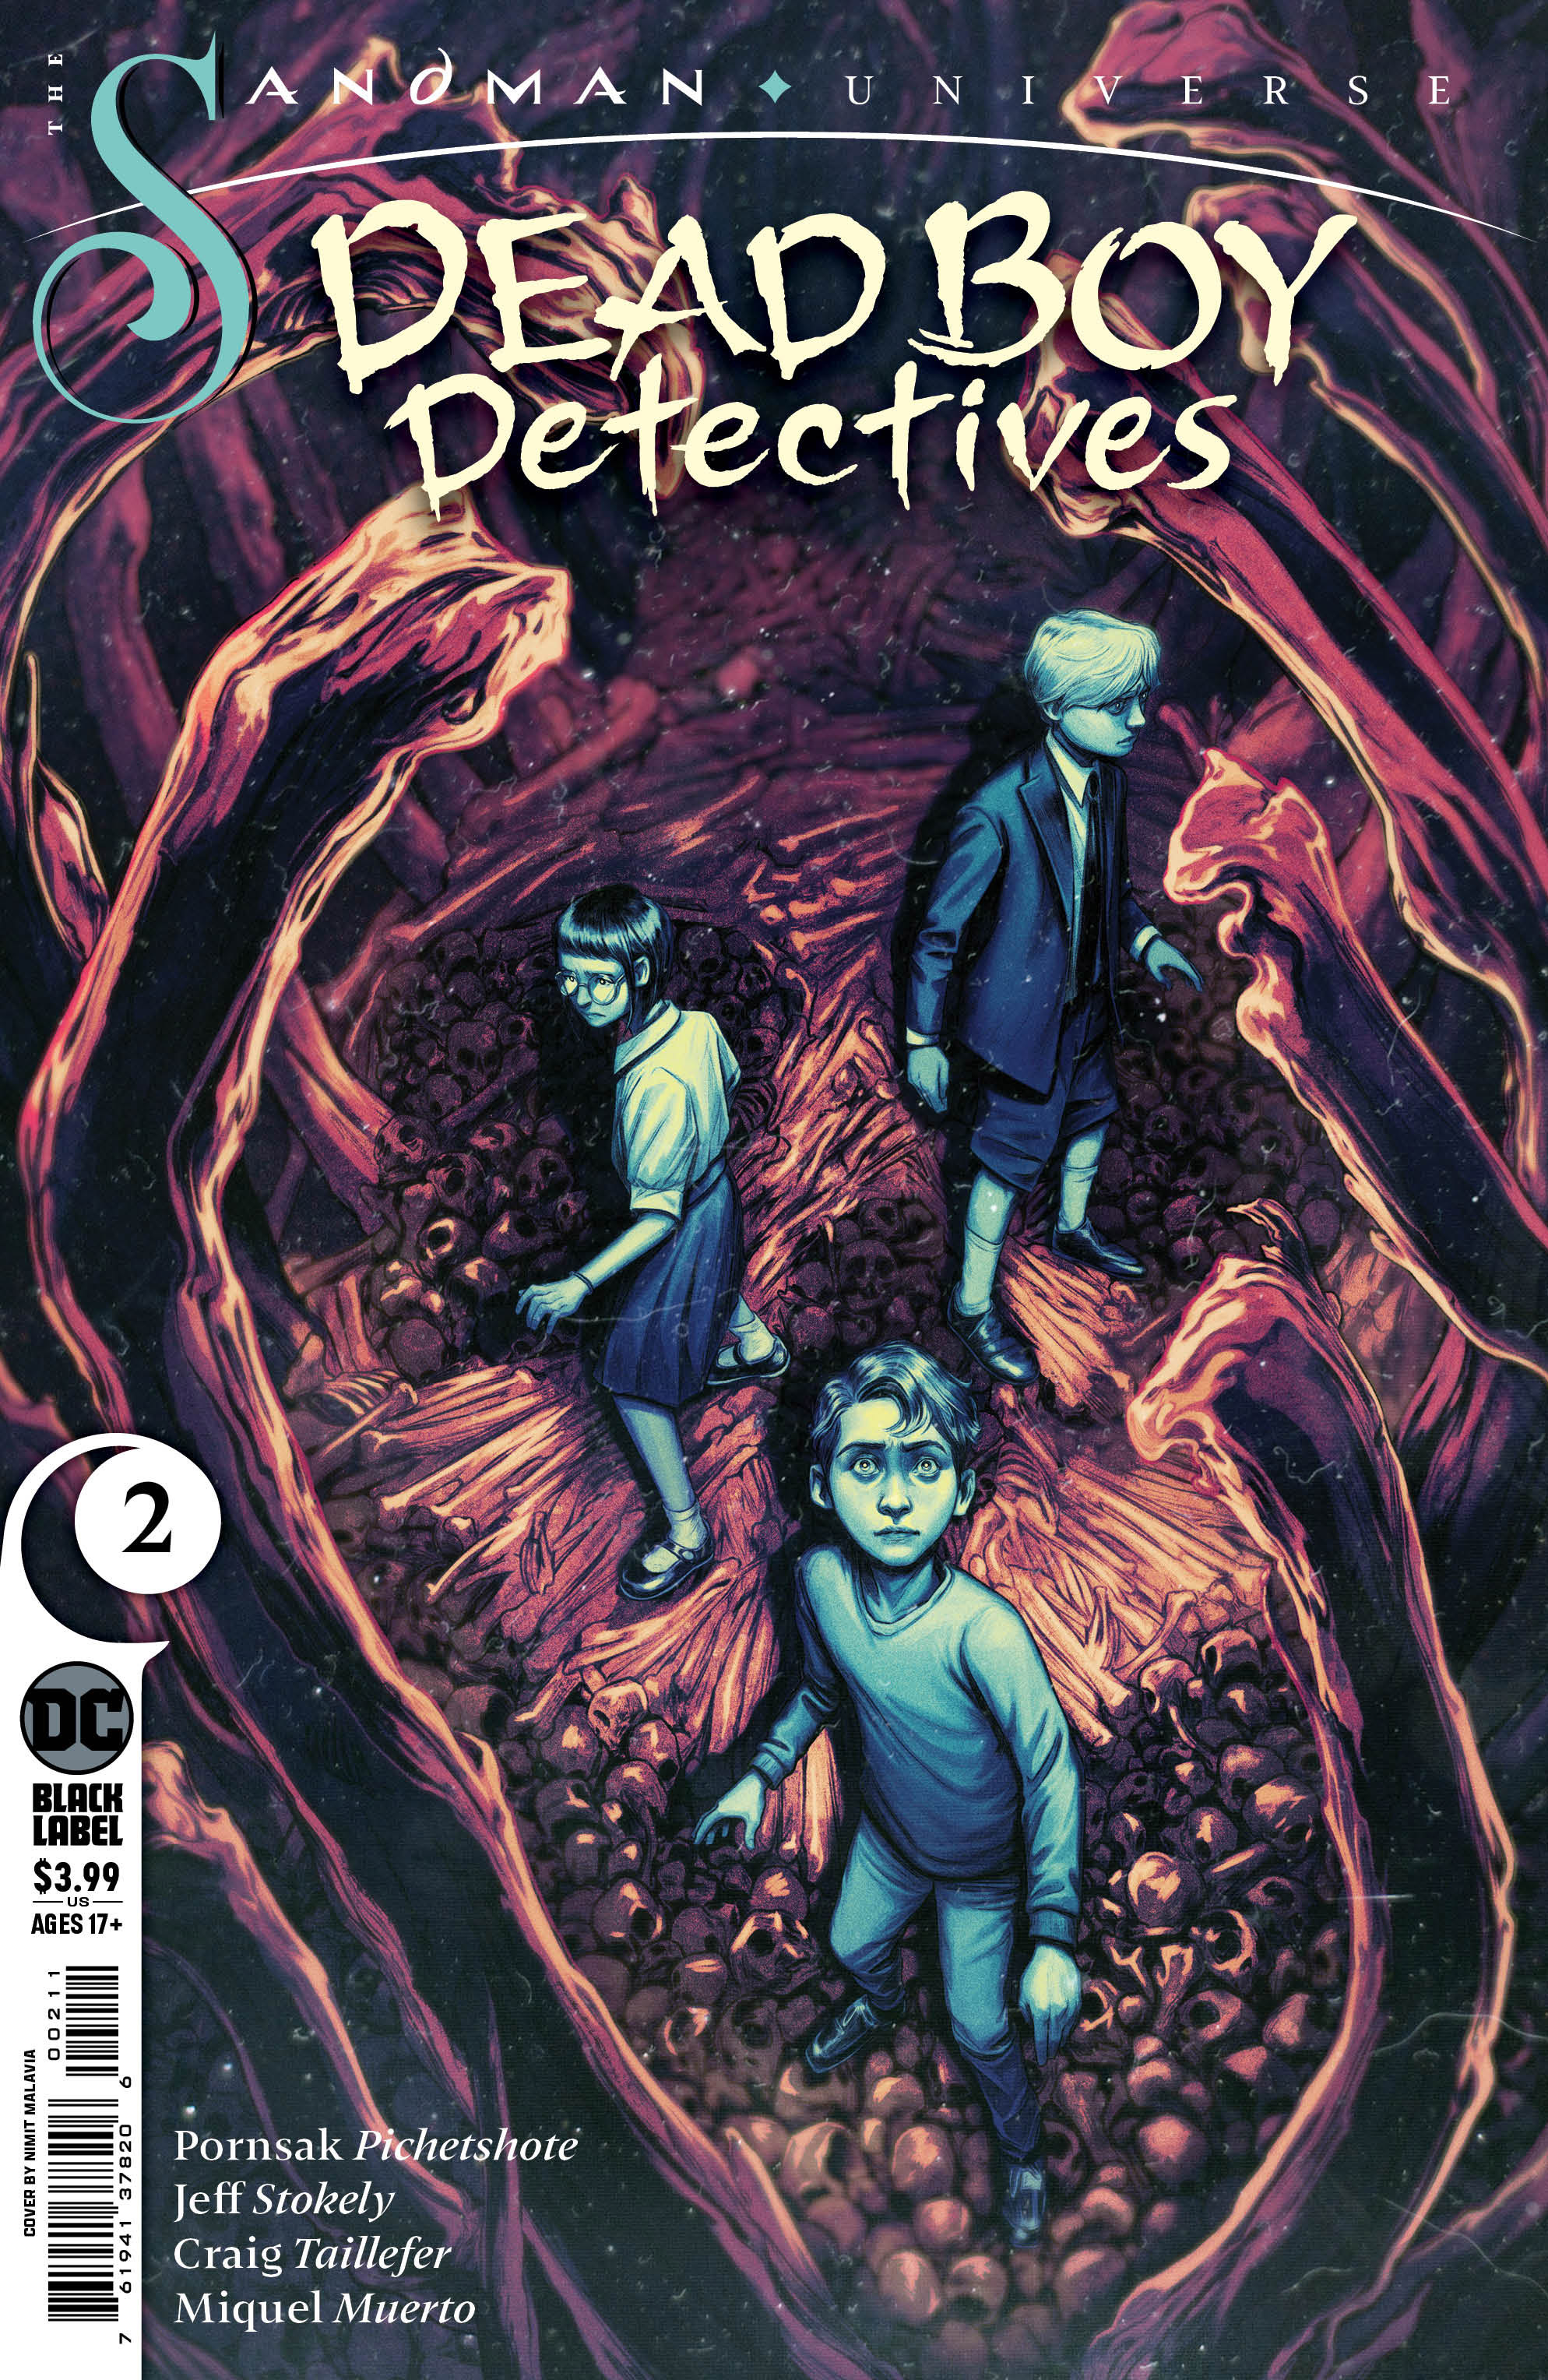 Sandman Universe Dead Boy Detectives #2 Cover A Nimit Malavia (Mature) (Of 6)